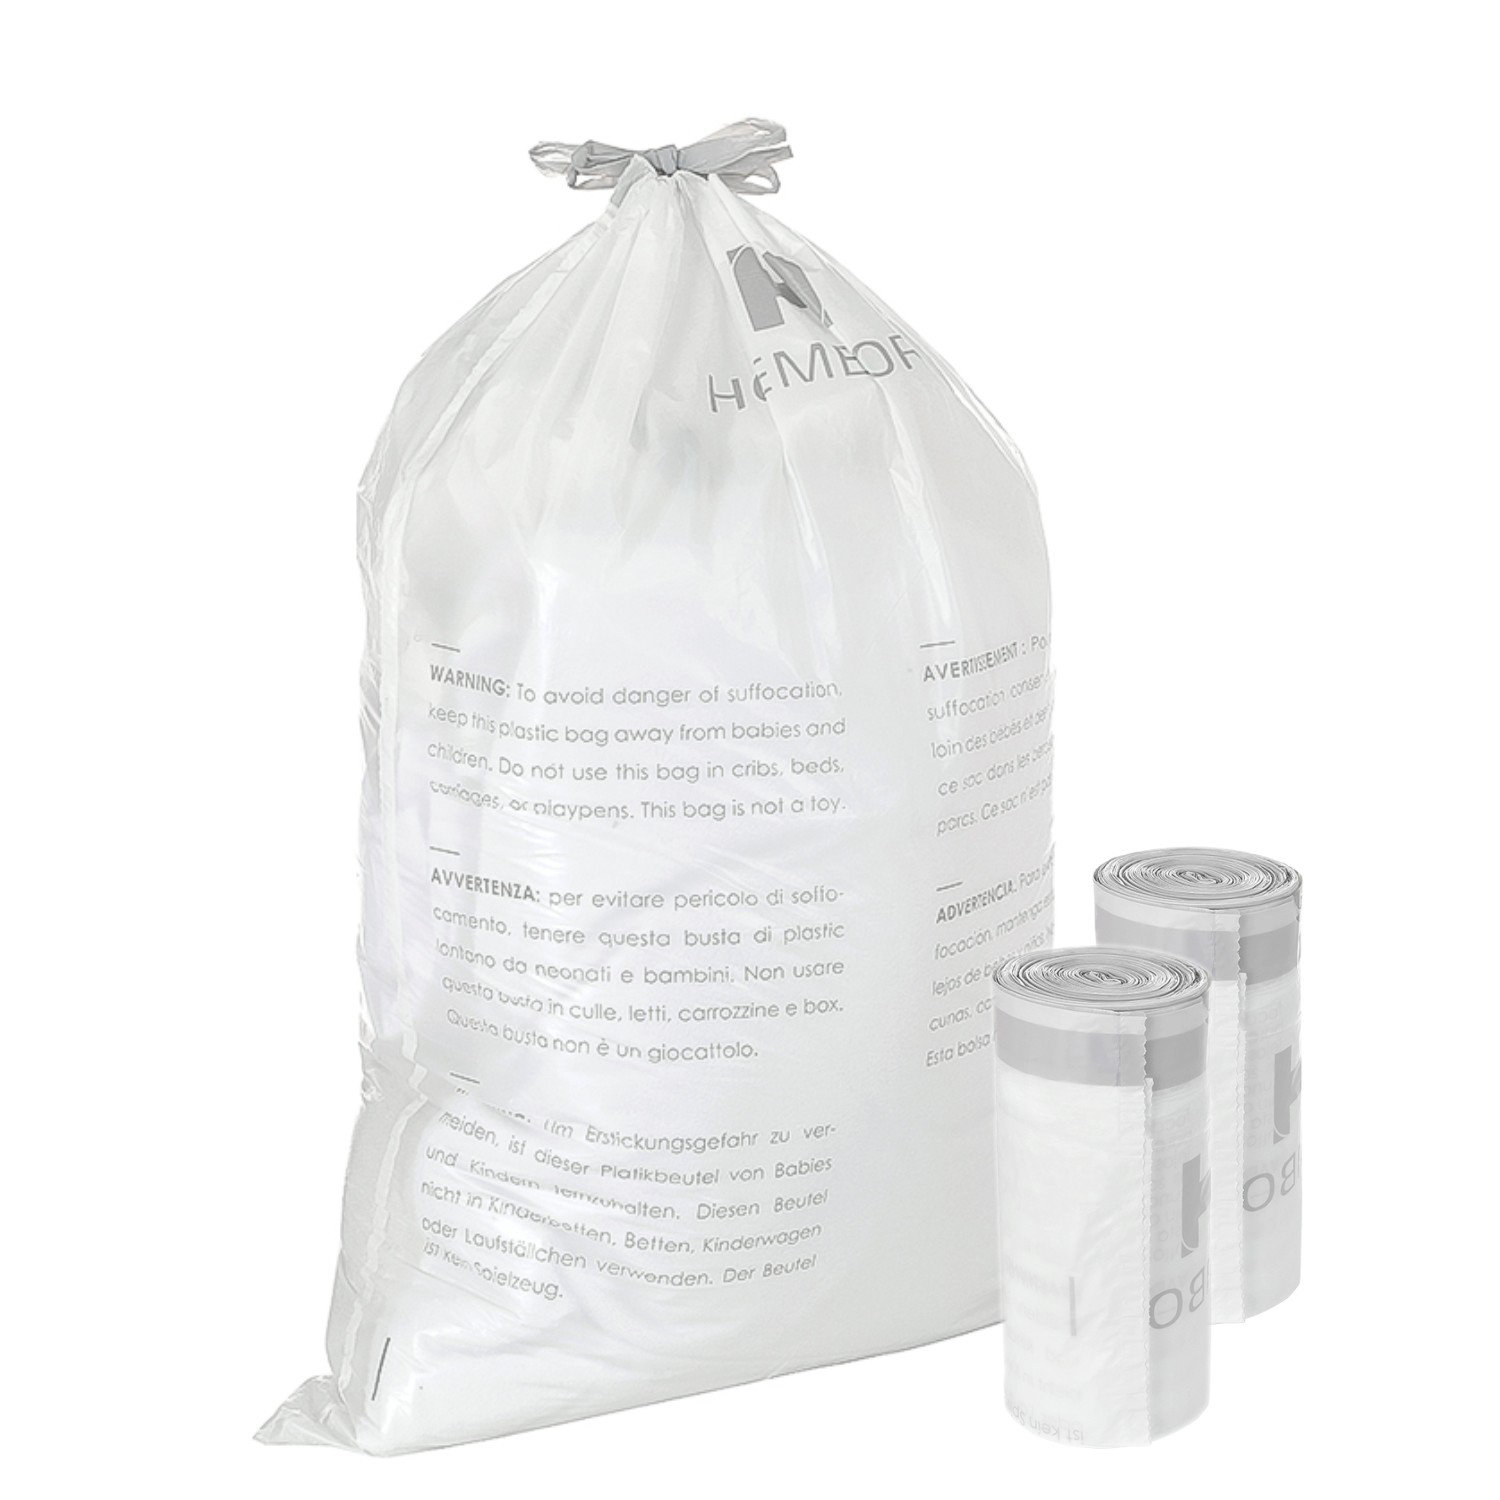 Brabantia Perfect fit Code G 6-8 Gallon Trash Bags, 240 Count & Reviews